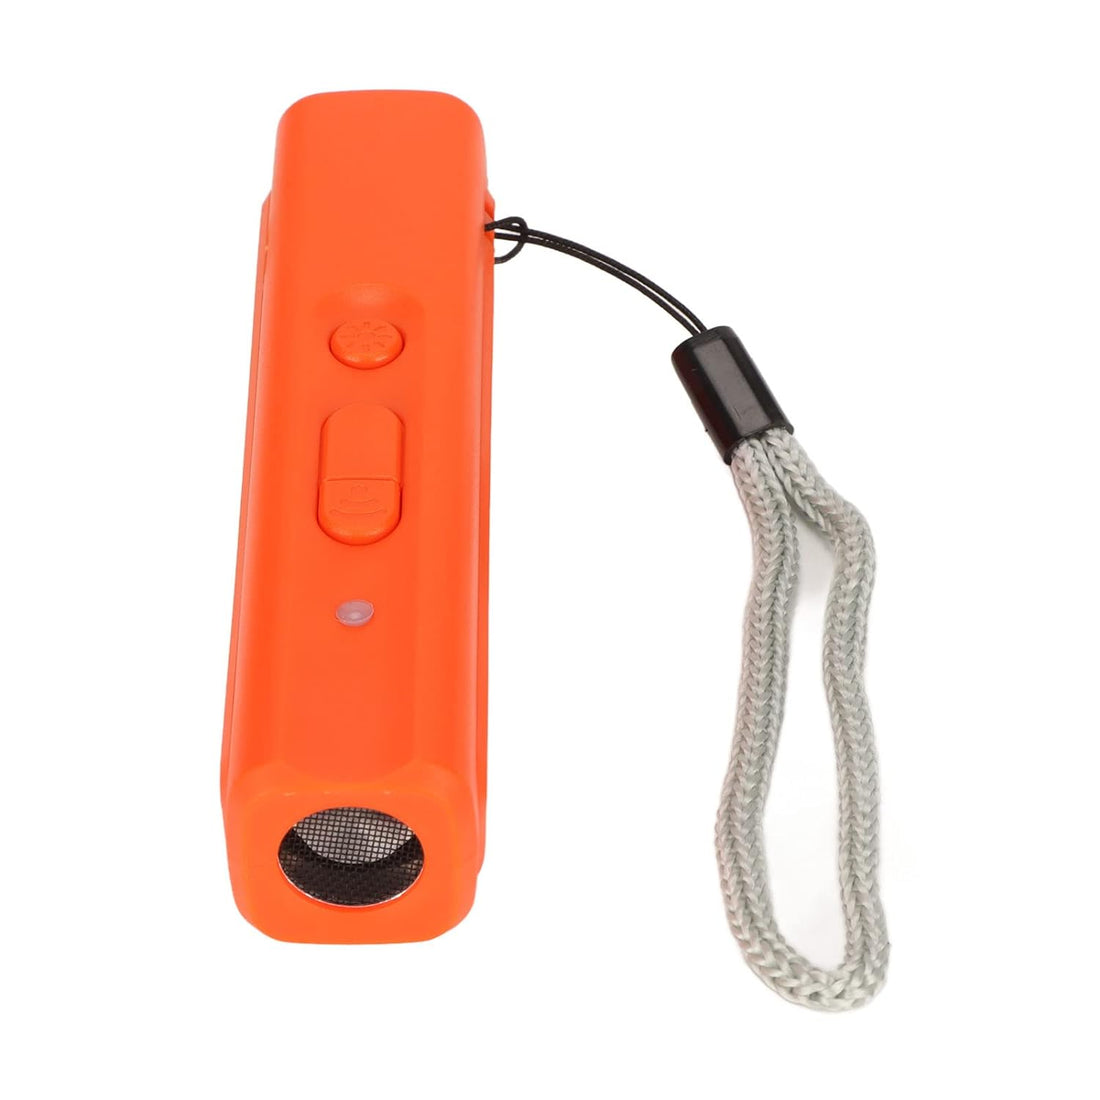 Hztyyier Dog Bark Deterrent Devices, Portable Safe Ultrasonic Dog Barking Control Devices Handheld 365NM Violet Light Beads with UV Violet Light Lanyard for Outdoor (Orange)